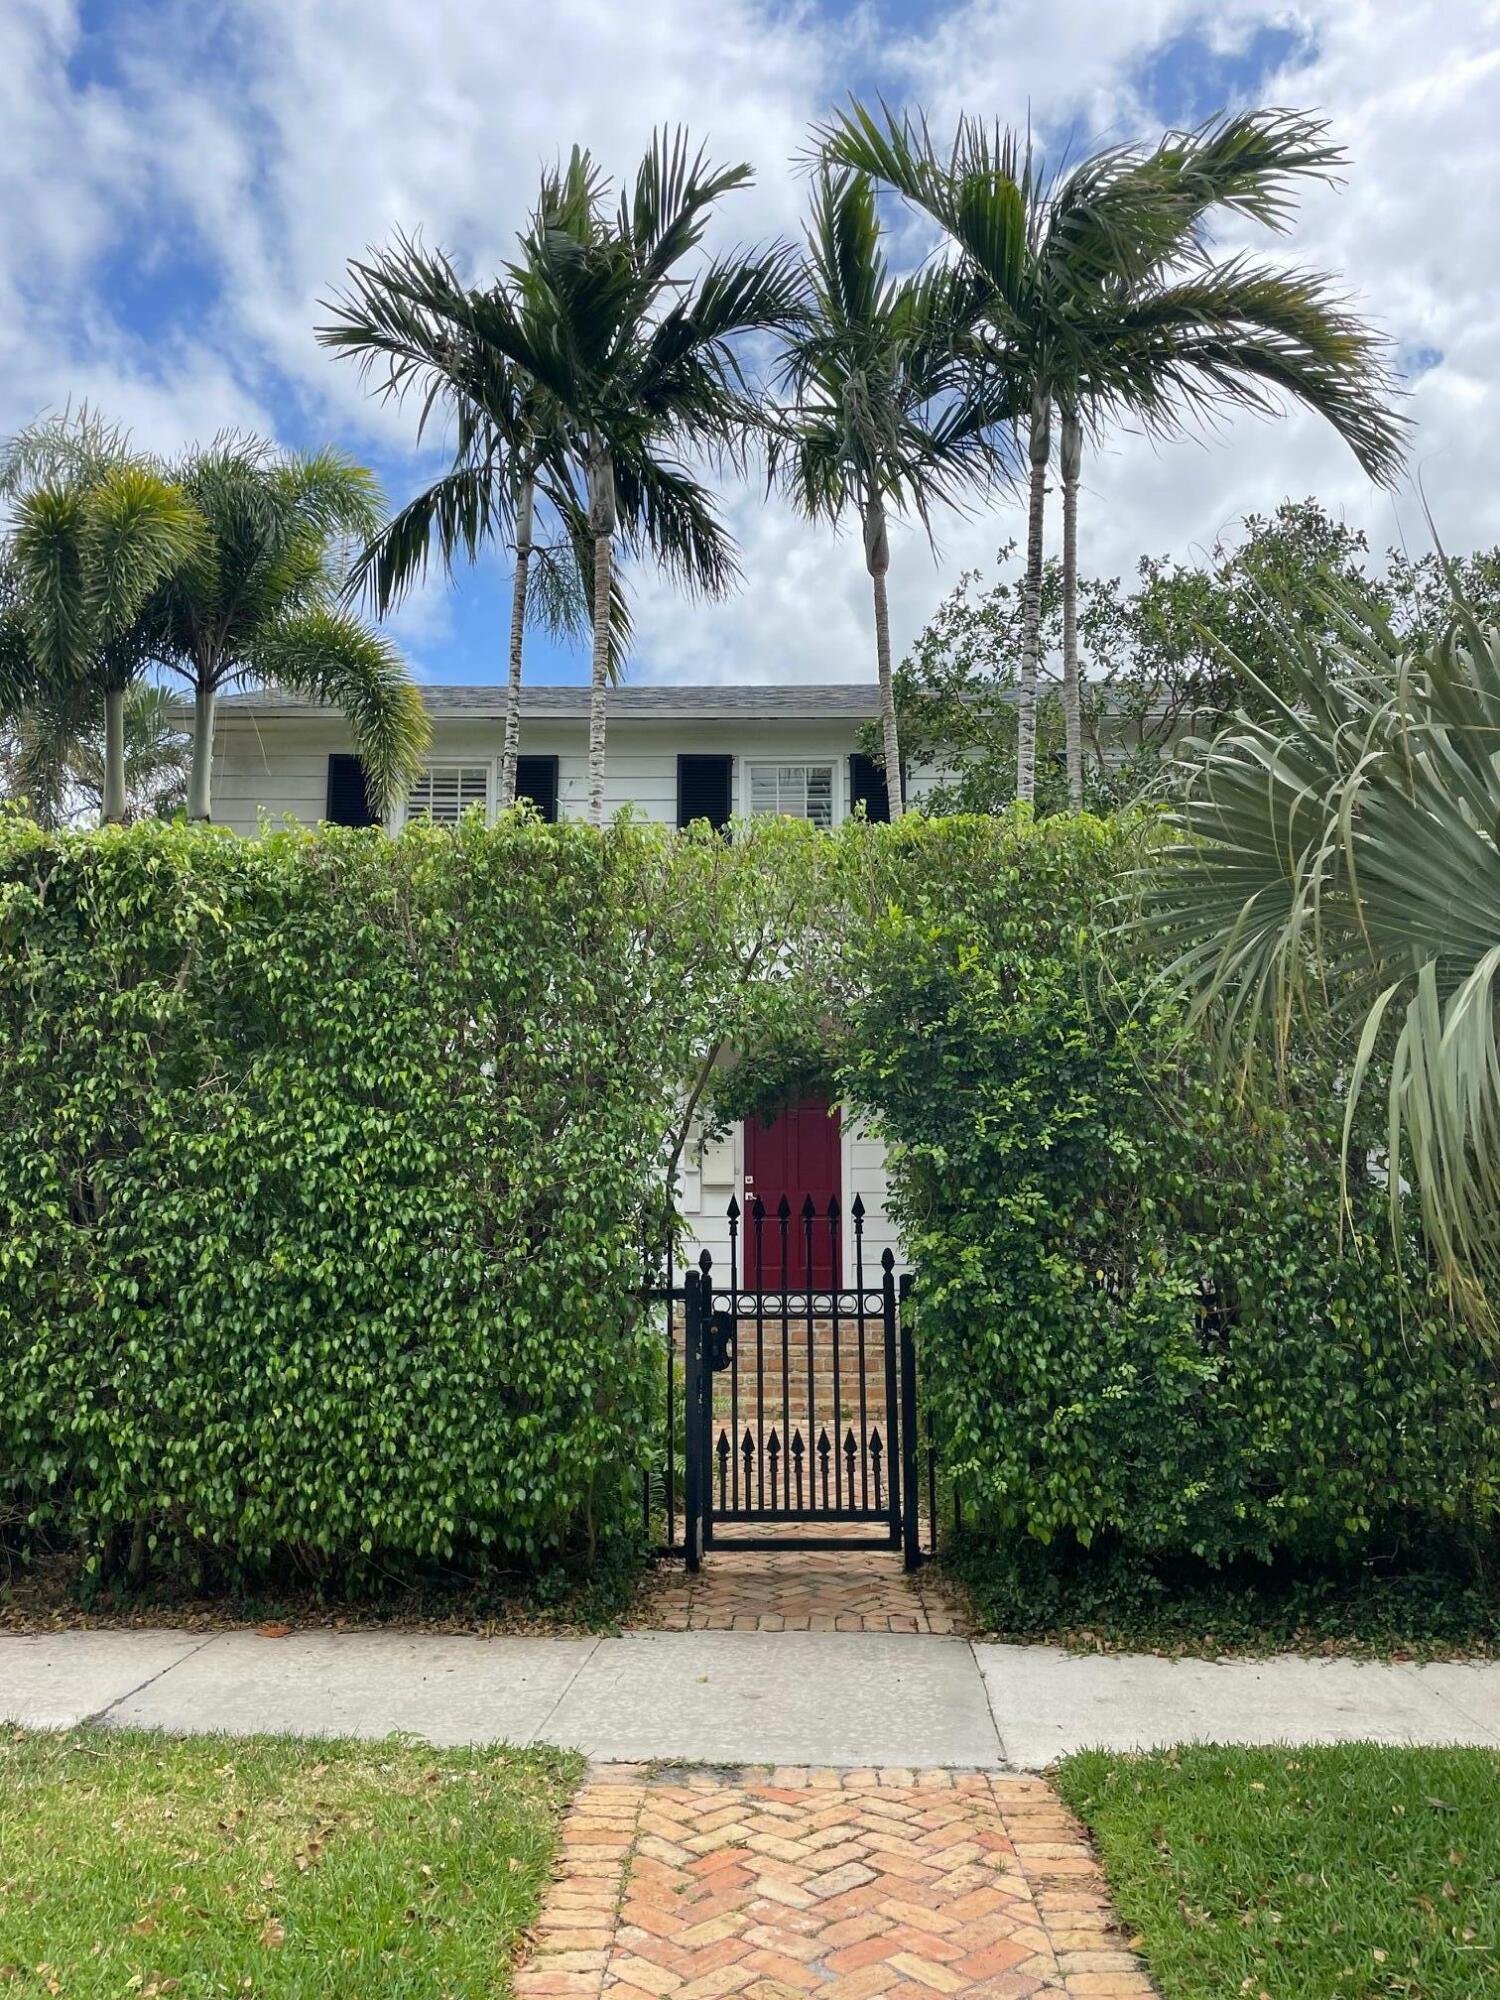 Rental Property at 300 Marlborough Road, West Palm Beach, Palm Beach County, Florida - Bedrooms: 3 
Bathrooms: 2  - $5,500 MO.